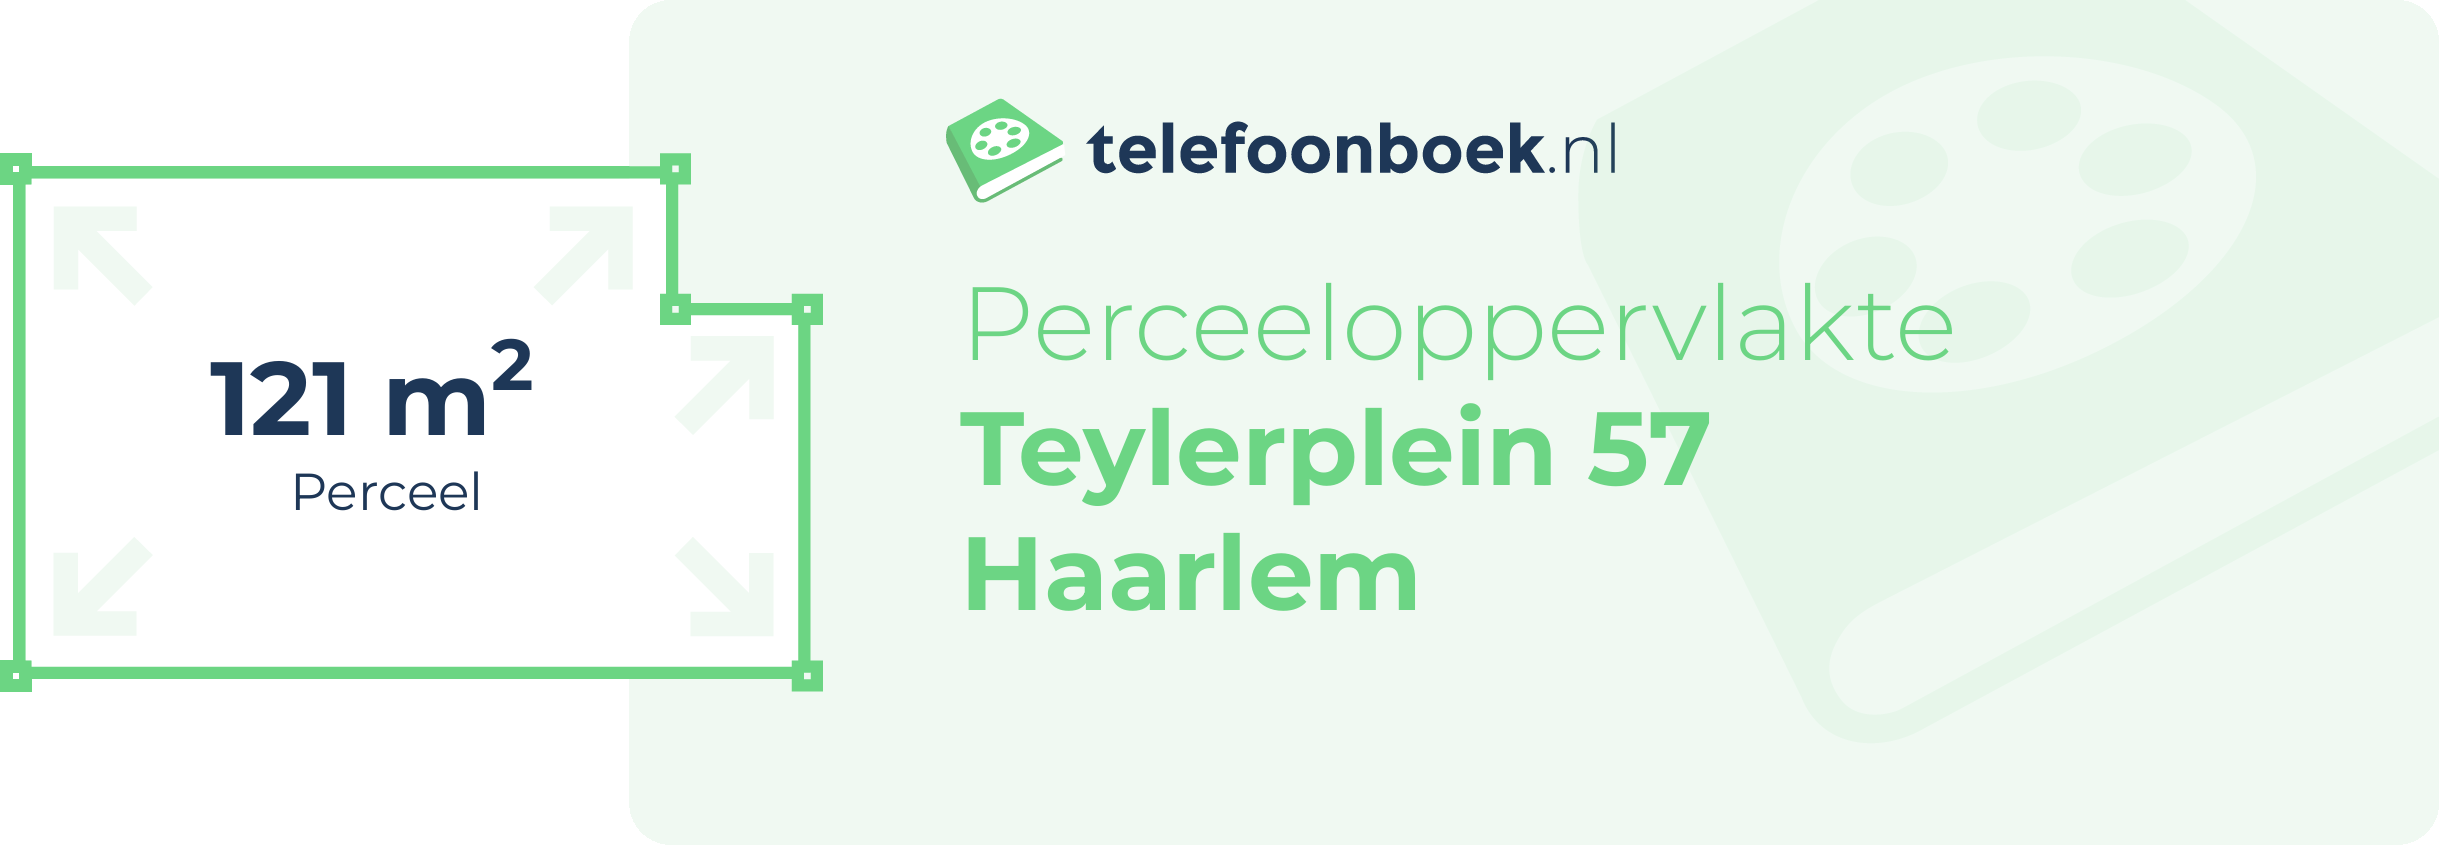 Perceeloppervlakte Teylerplein 57 Haarlem